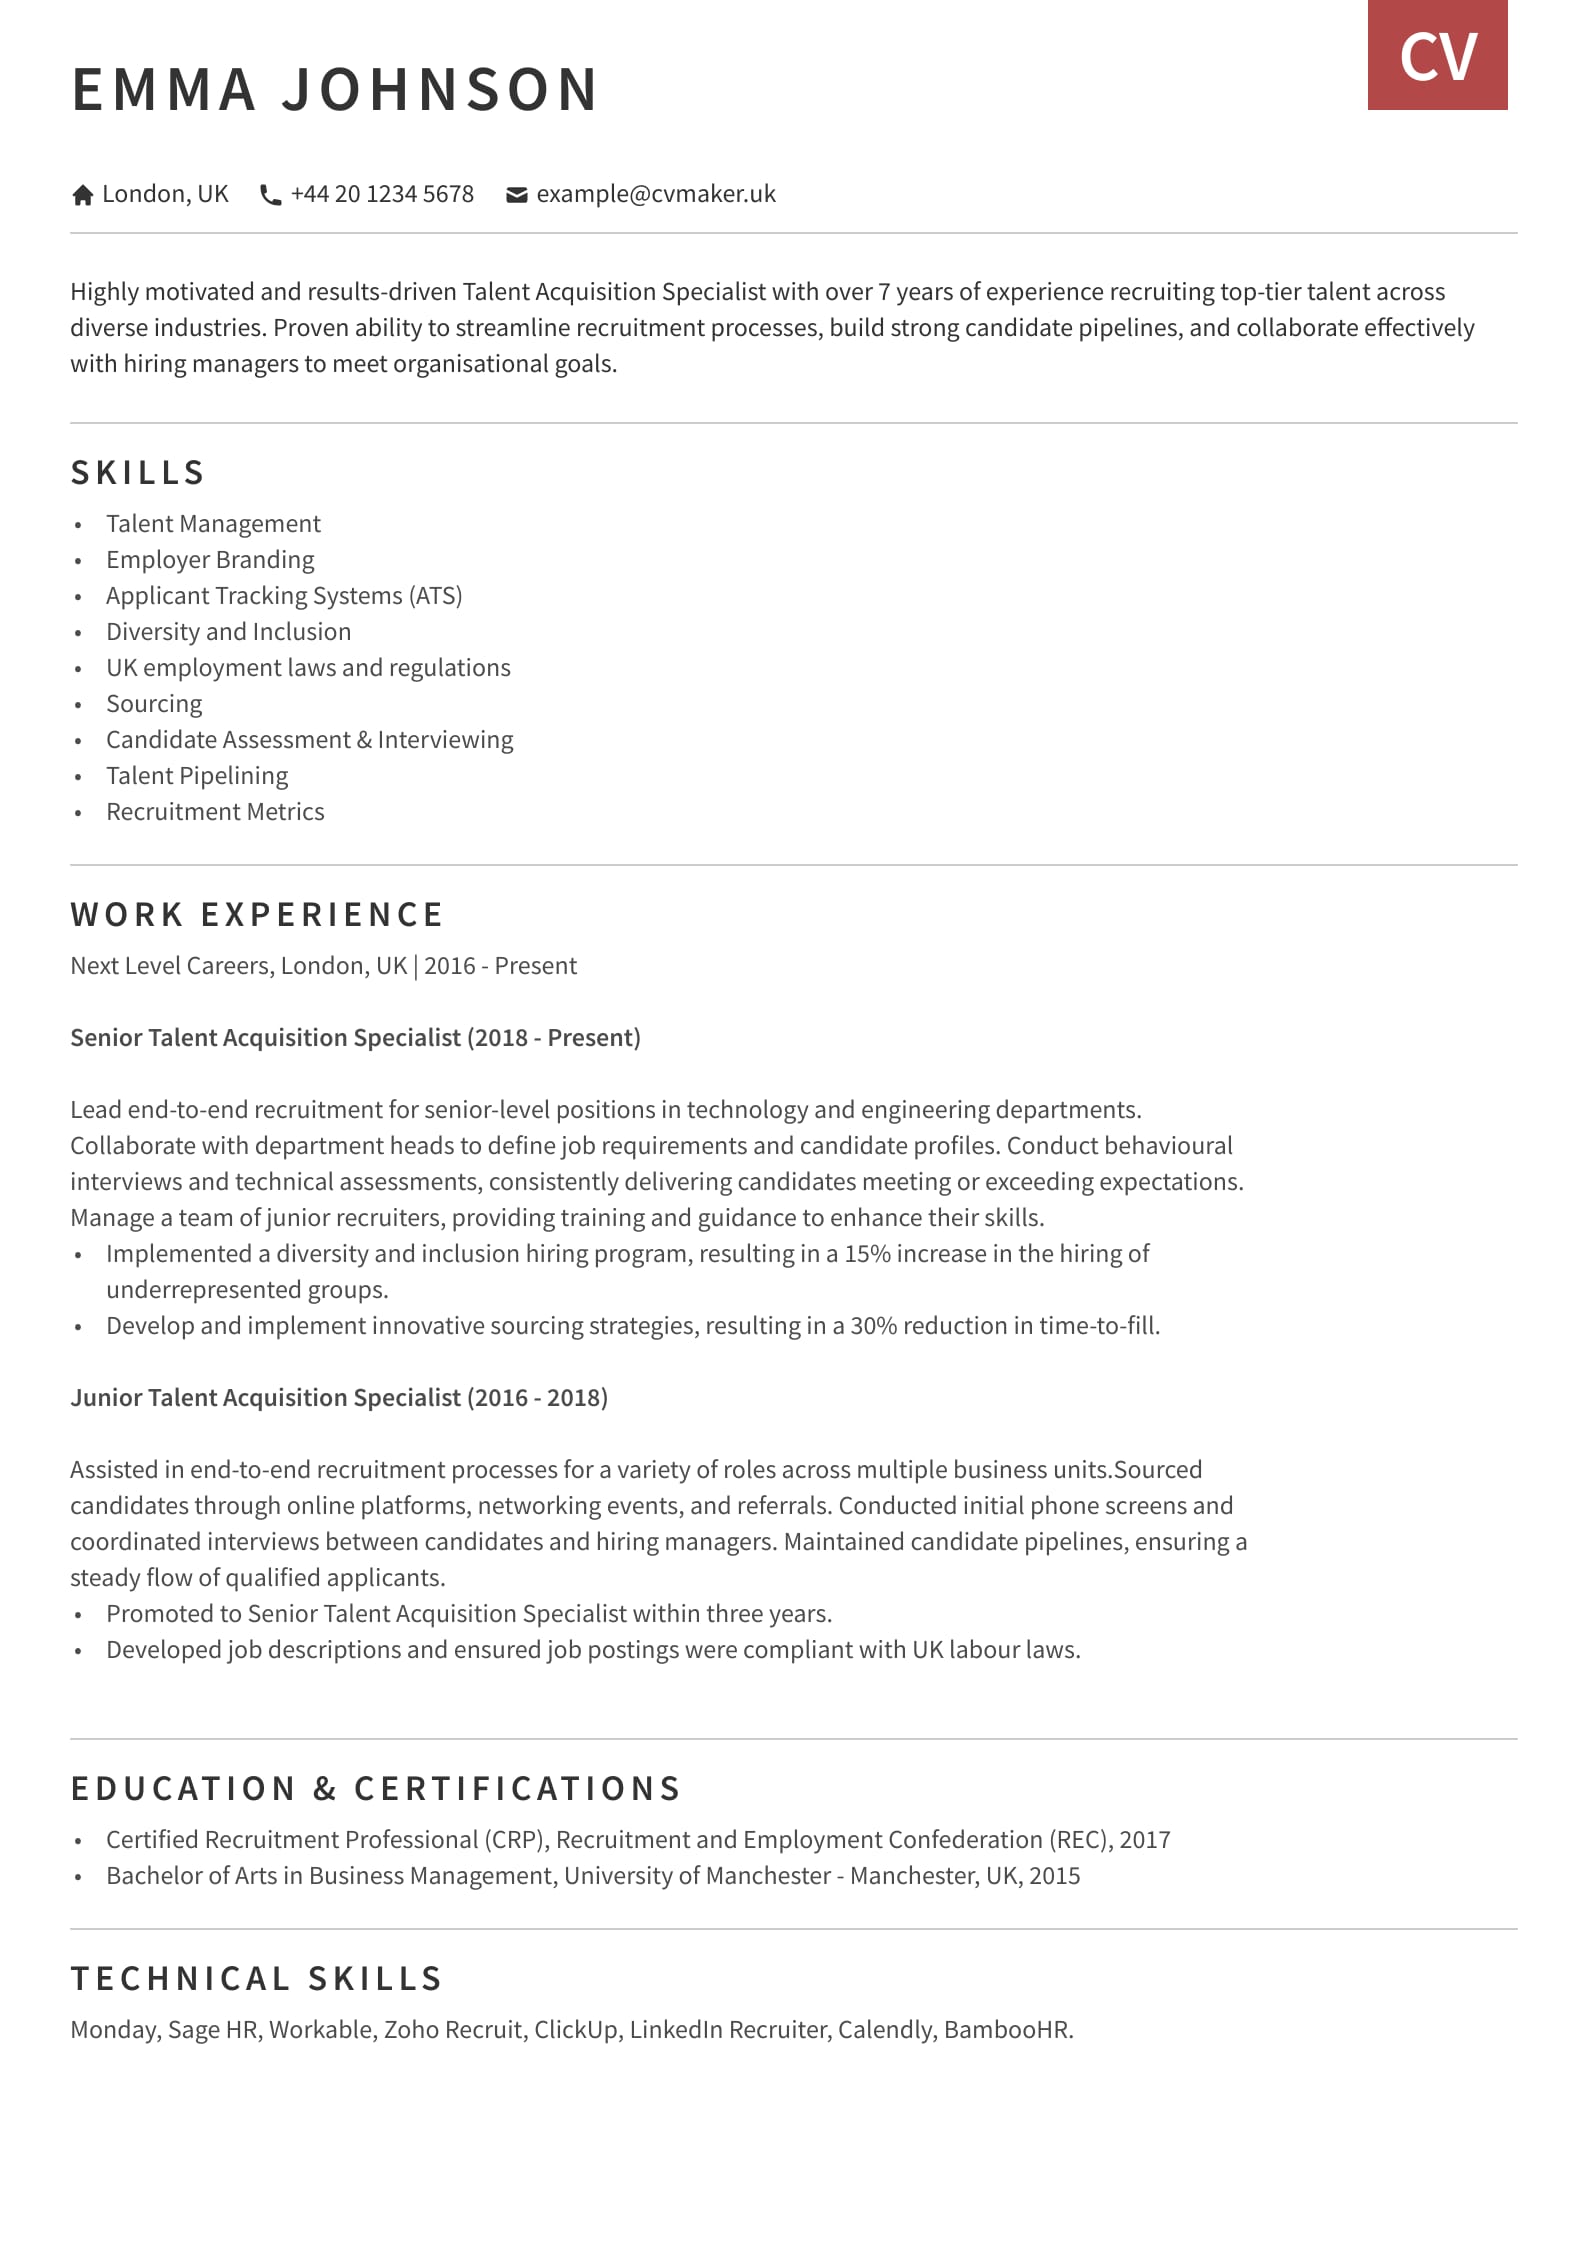 CV example - Talent Acquisition - Otago template